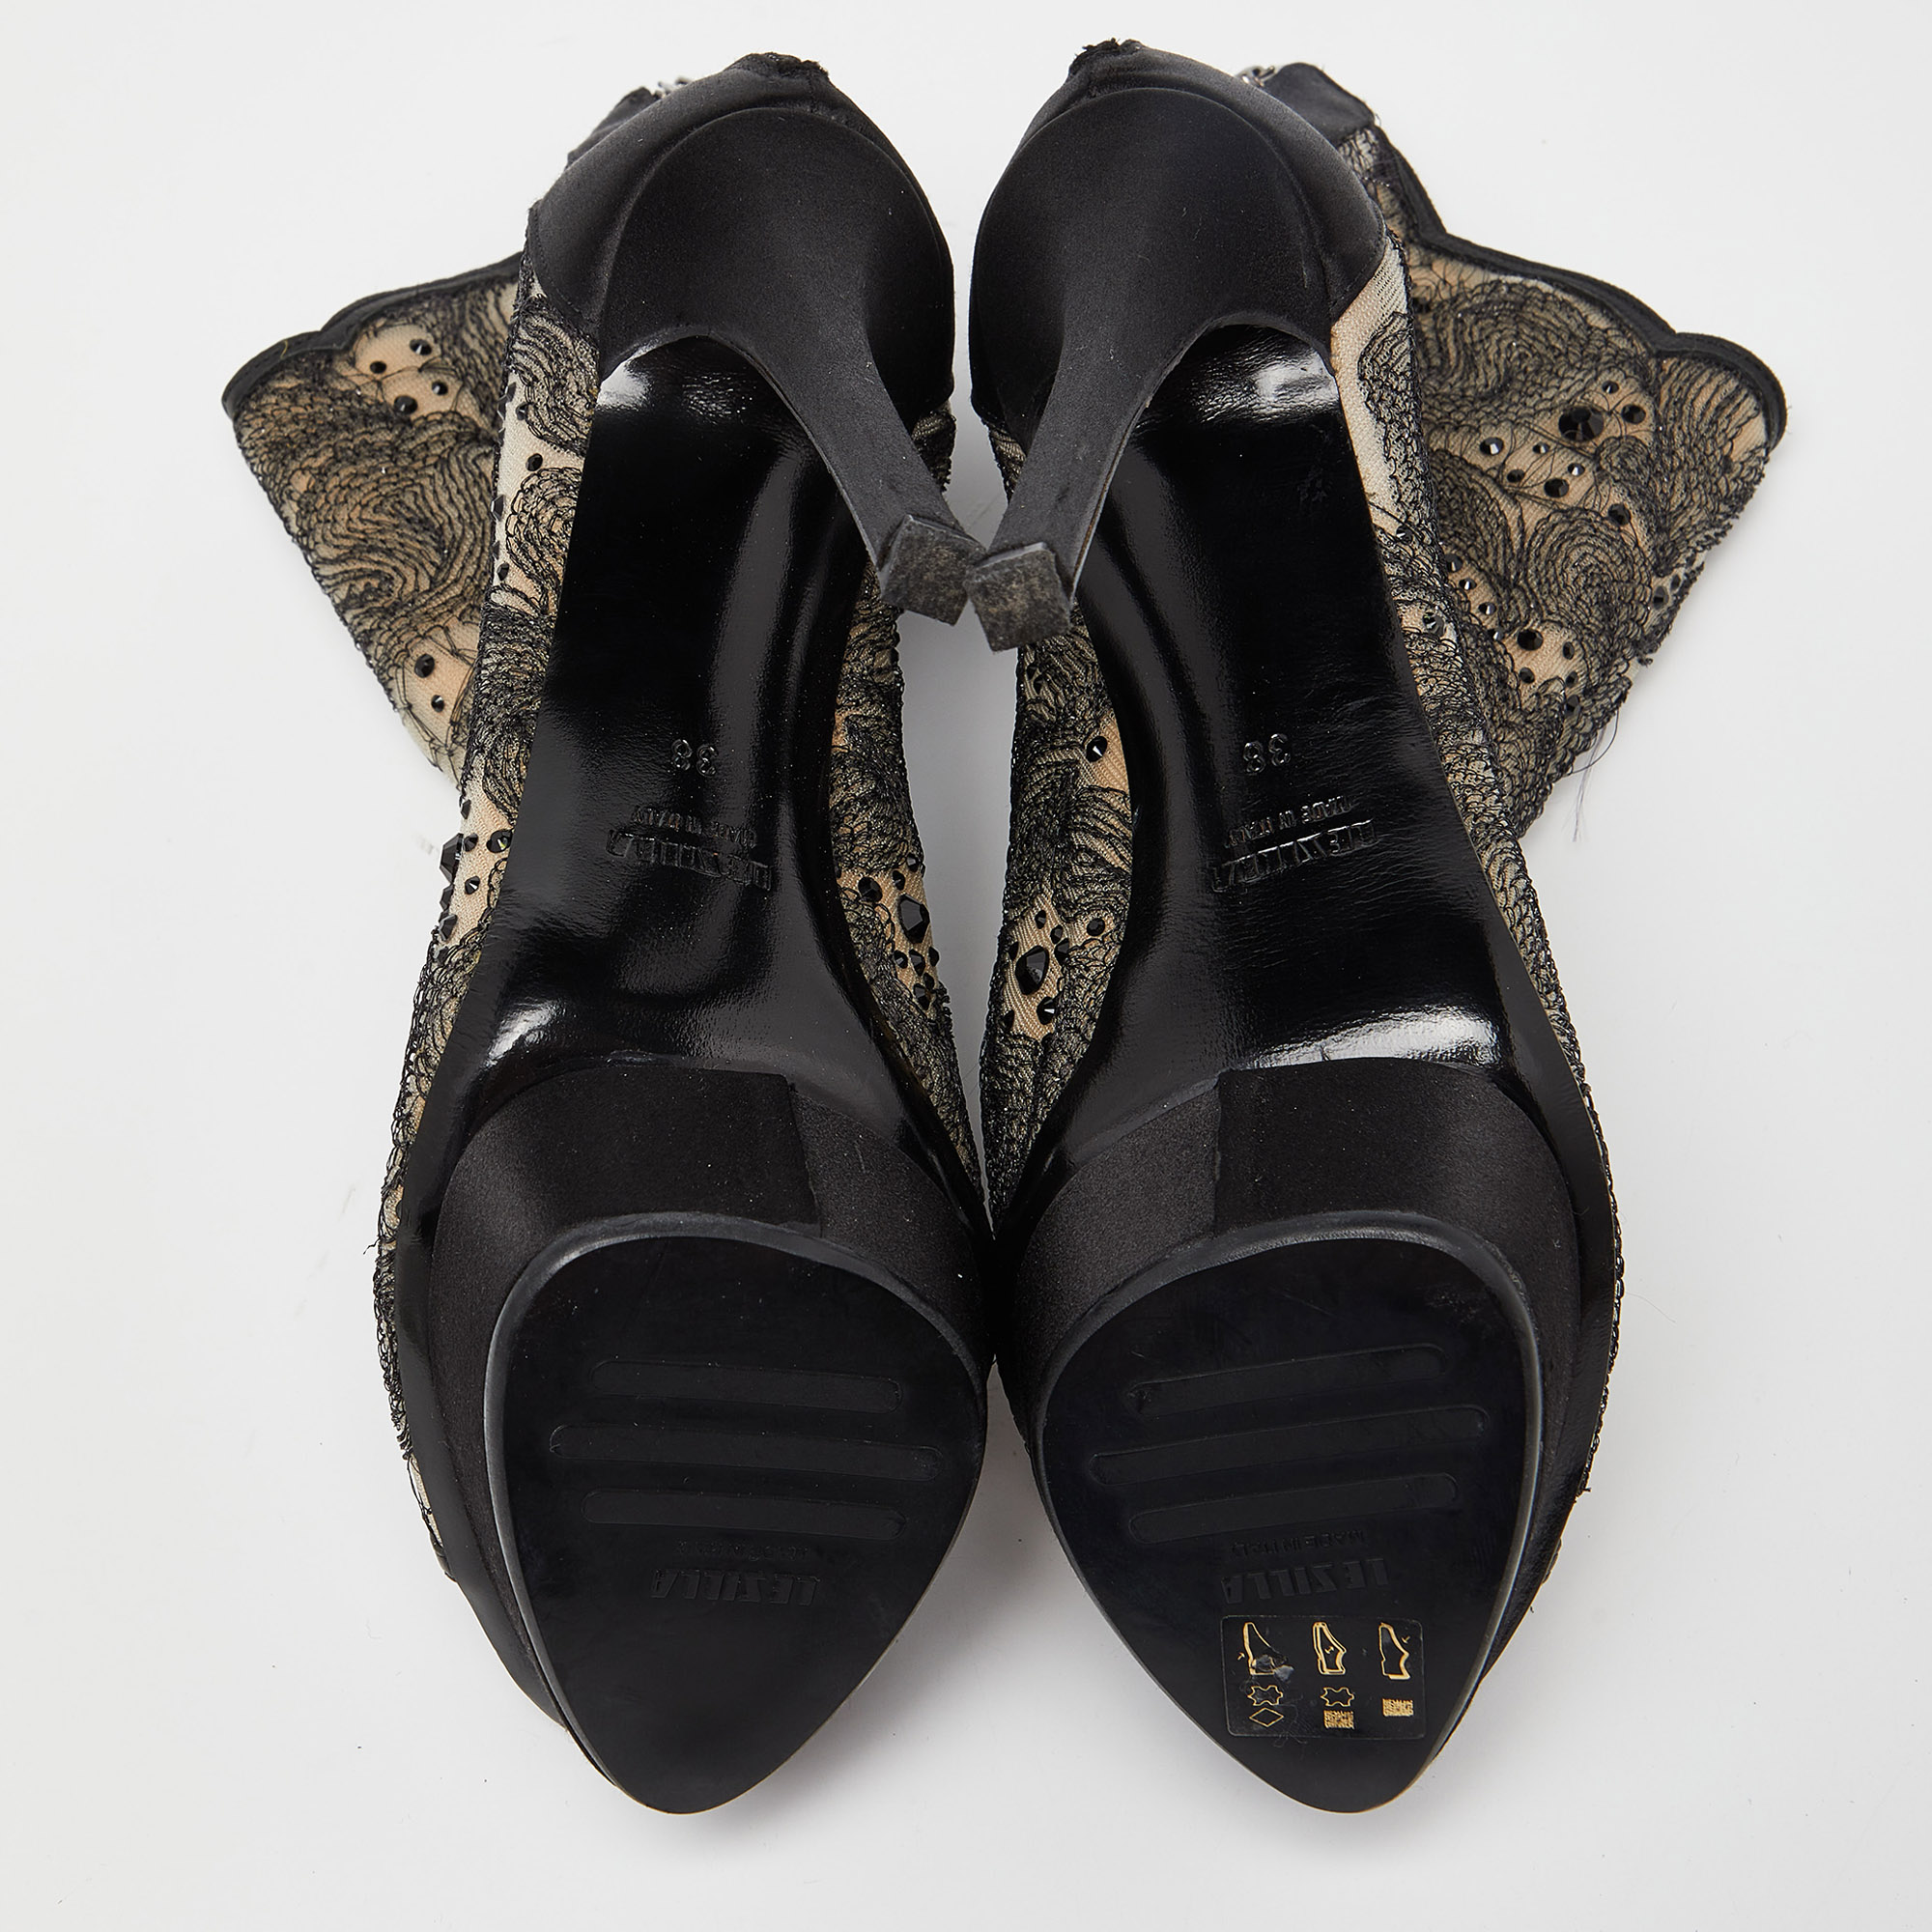 Le Silla Black/Beige Embellished Mesh Peep Toe Platform Ankle Booties Size 38